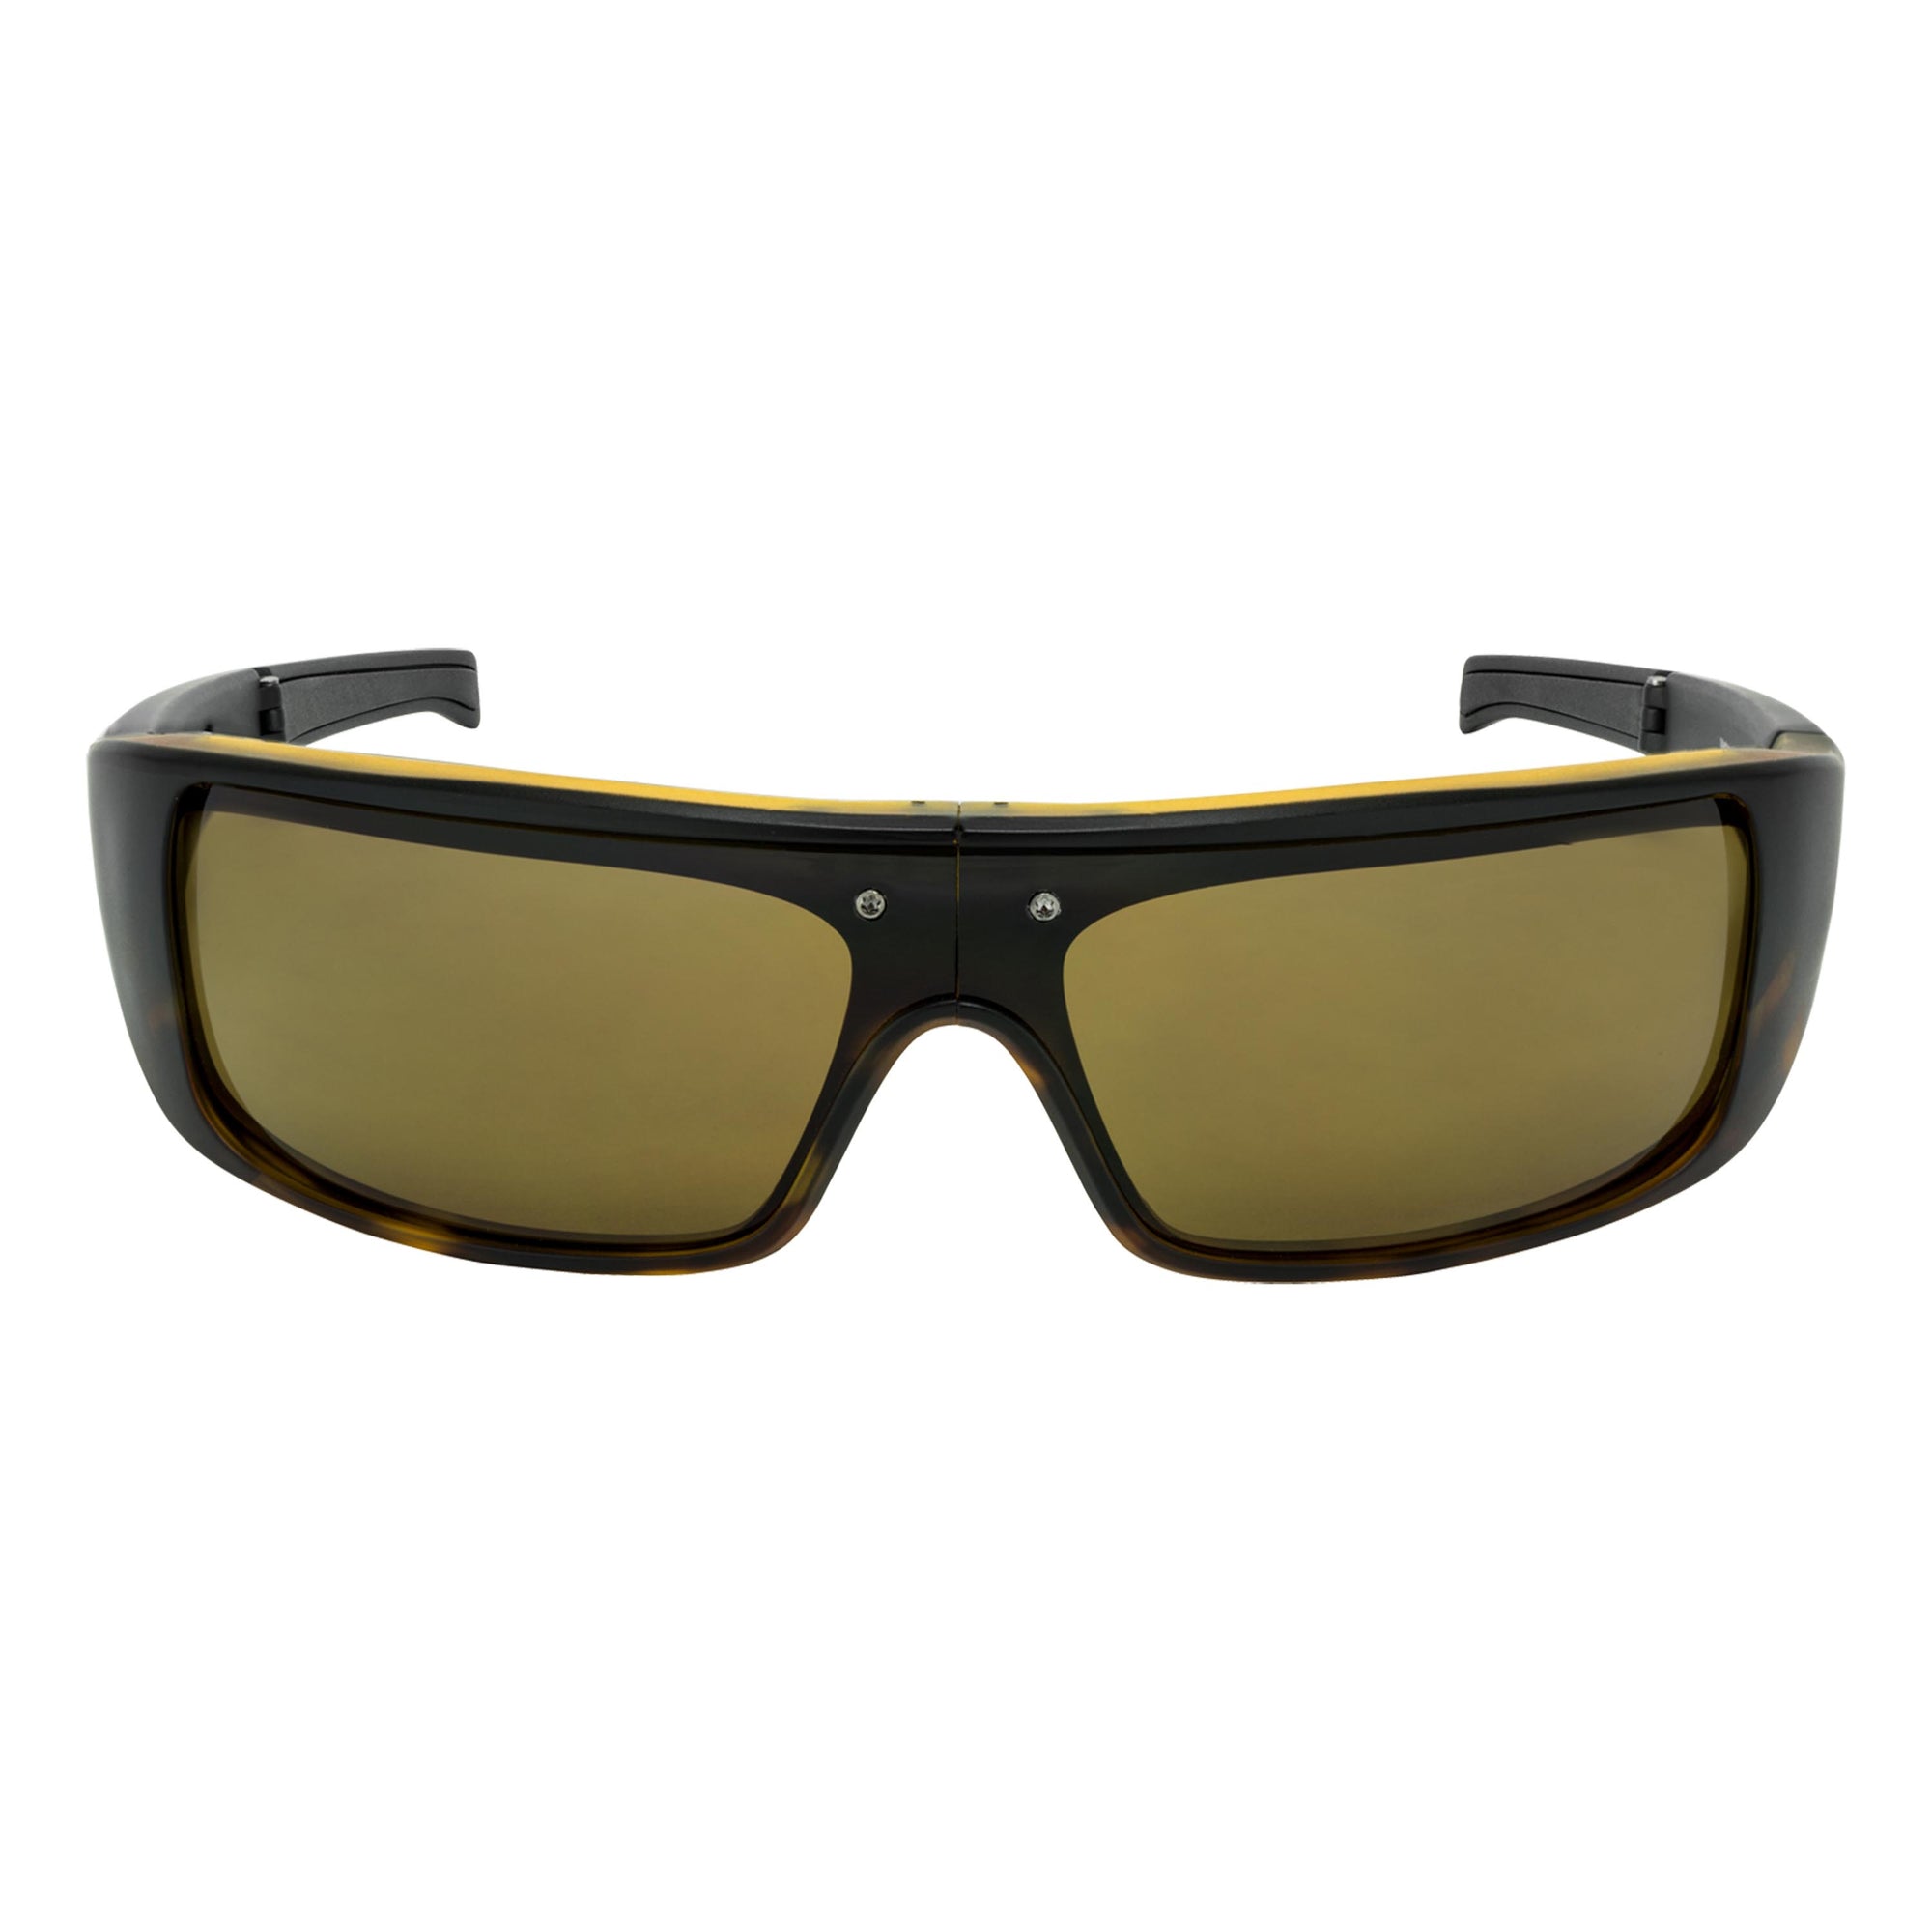 Popticals, Premium Compact Sunglasses, PopGear, 010050-AUNP, Polarized Sunglasses, Matte Black Tortoise, Brown Lenses, Glam View